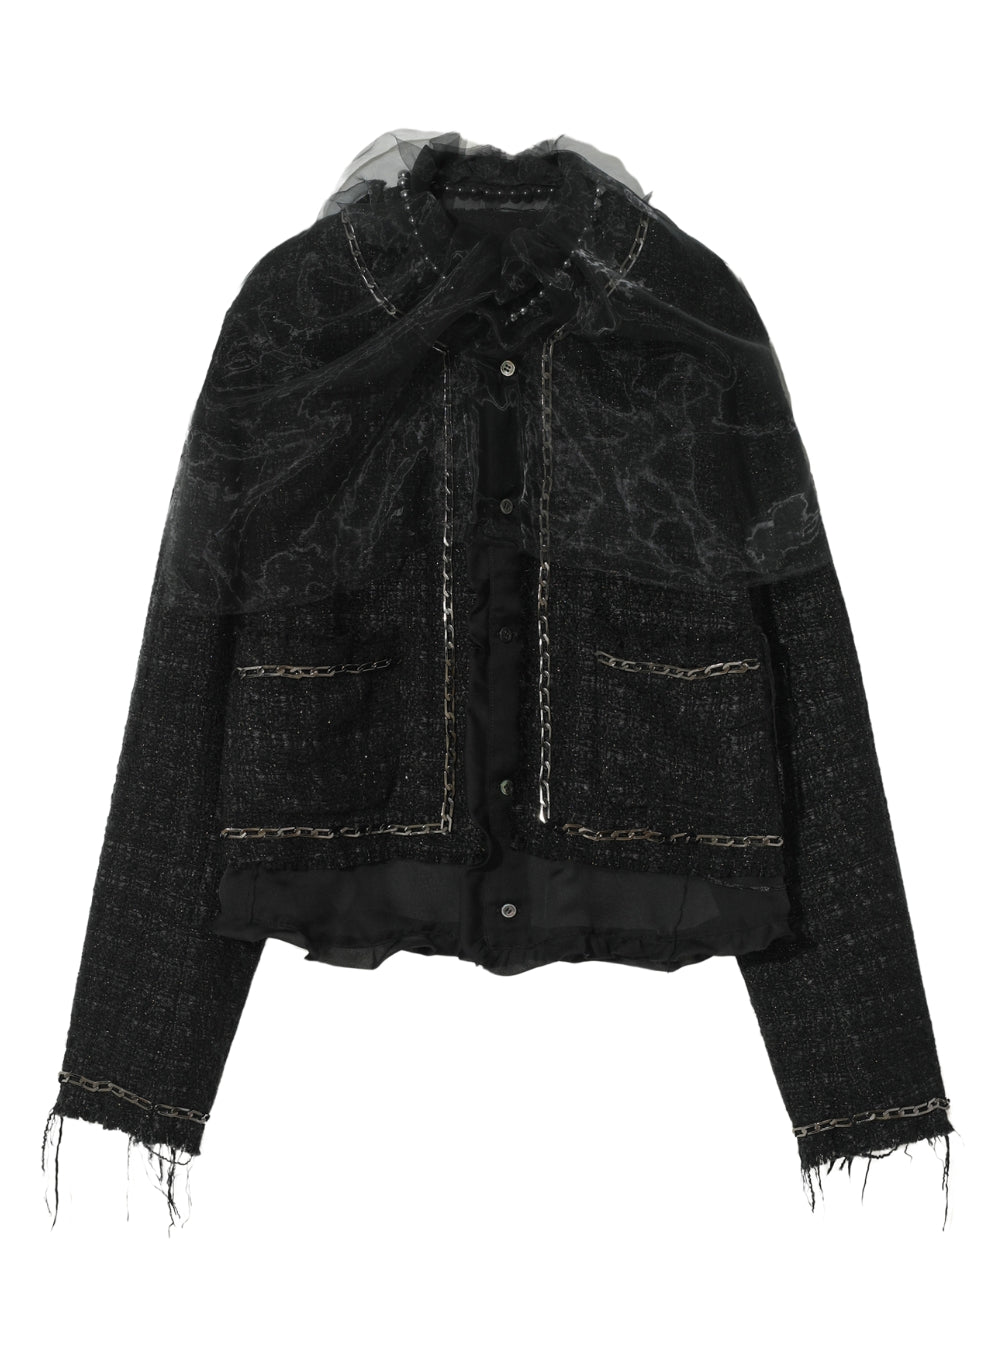 UNDERCOVER | Sheer Overlay Embellished Tweed Jacket